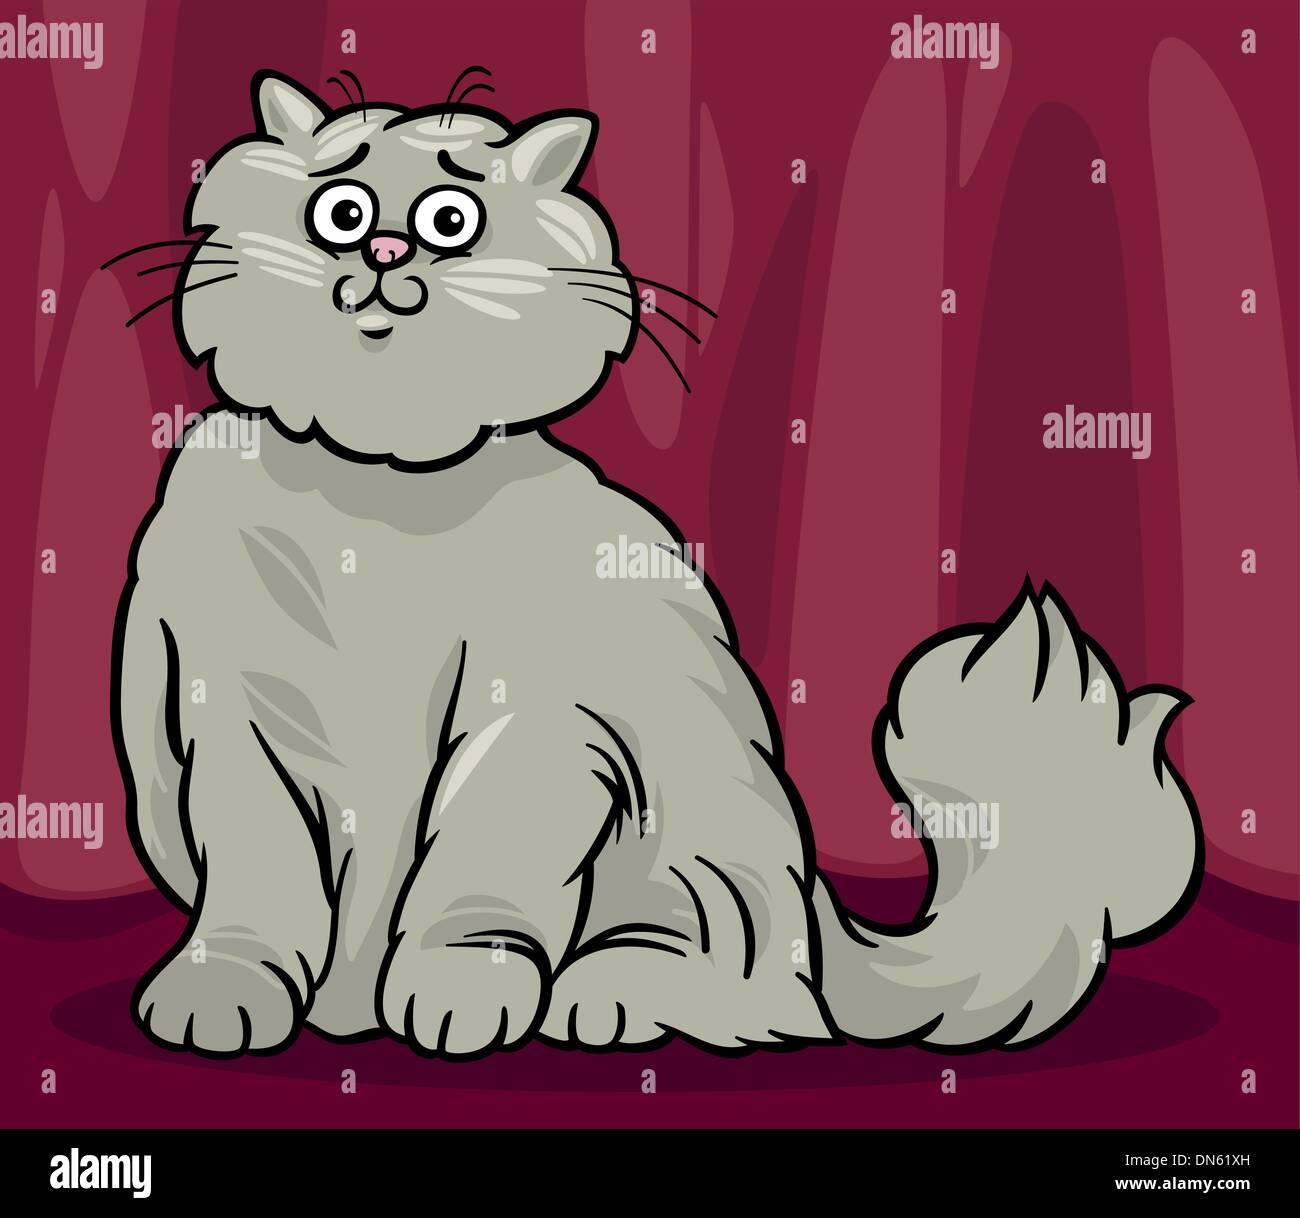 Persian Cat Cartoon Illustration Stock Vector Image And Art Alamy